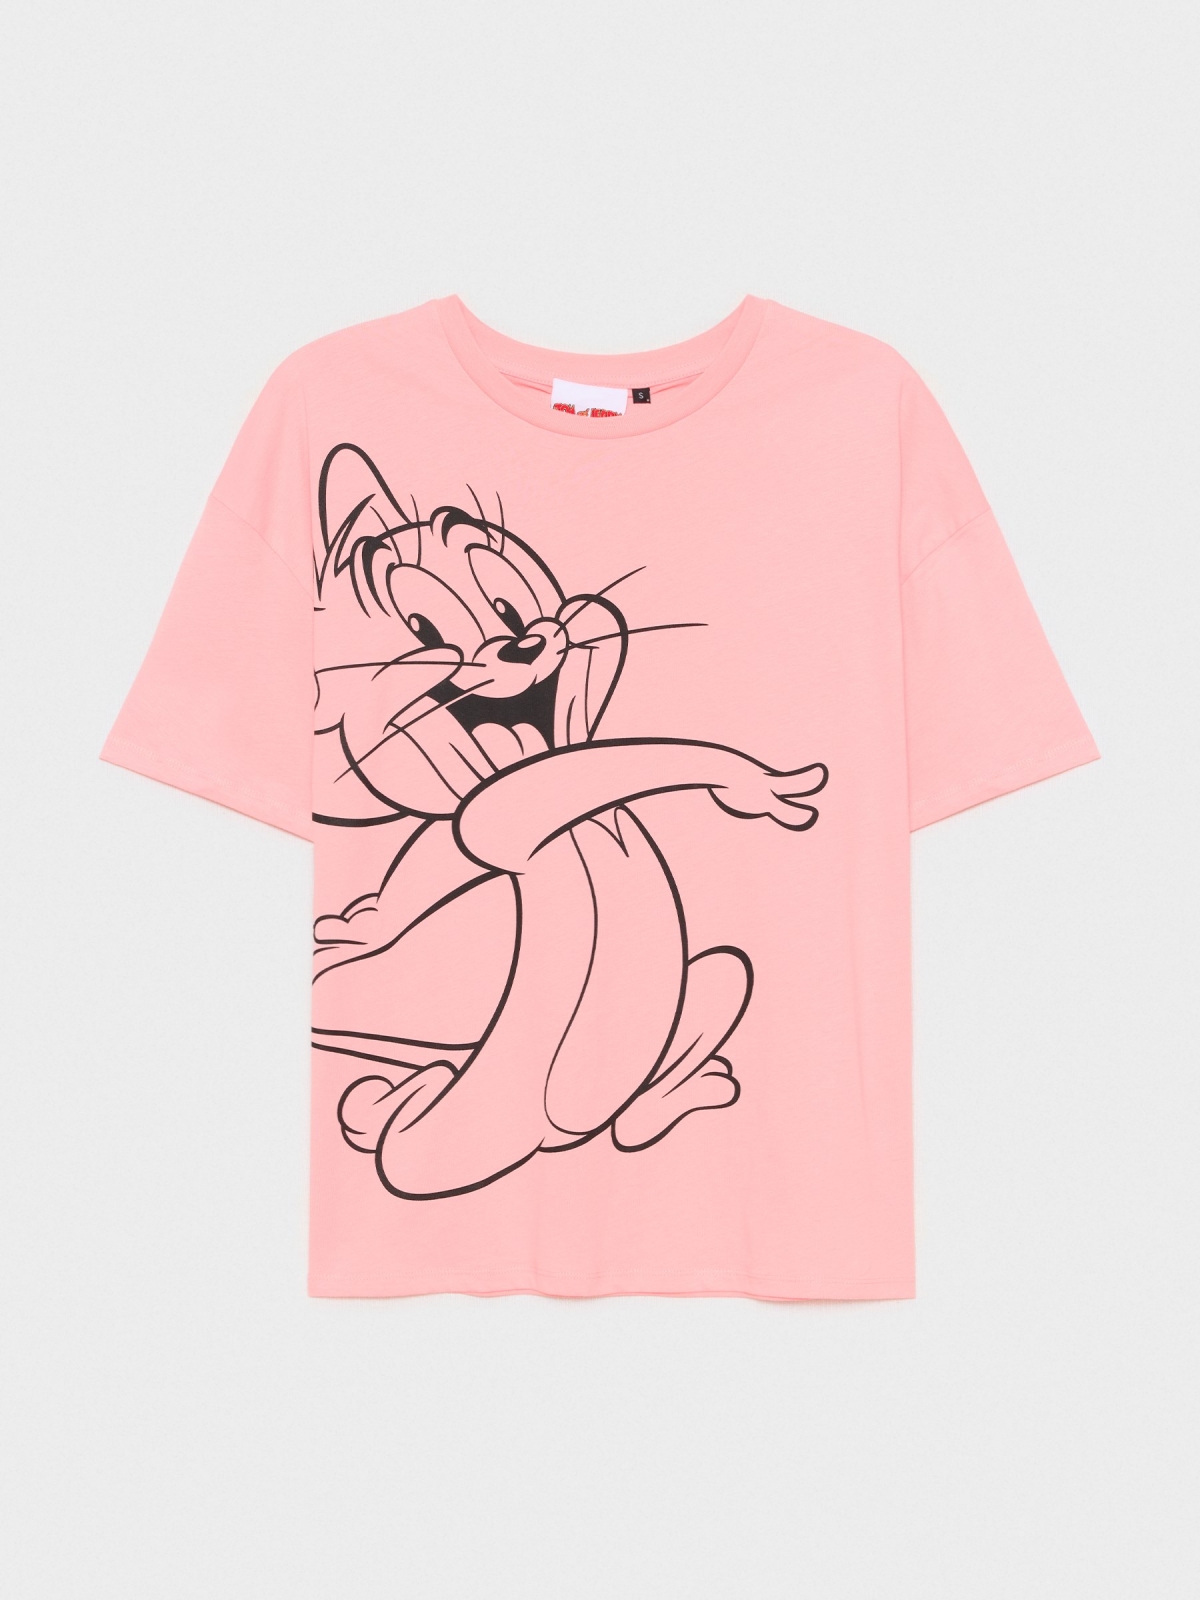  Camiseta oversized Tom & Jerry rosa claro